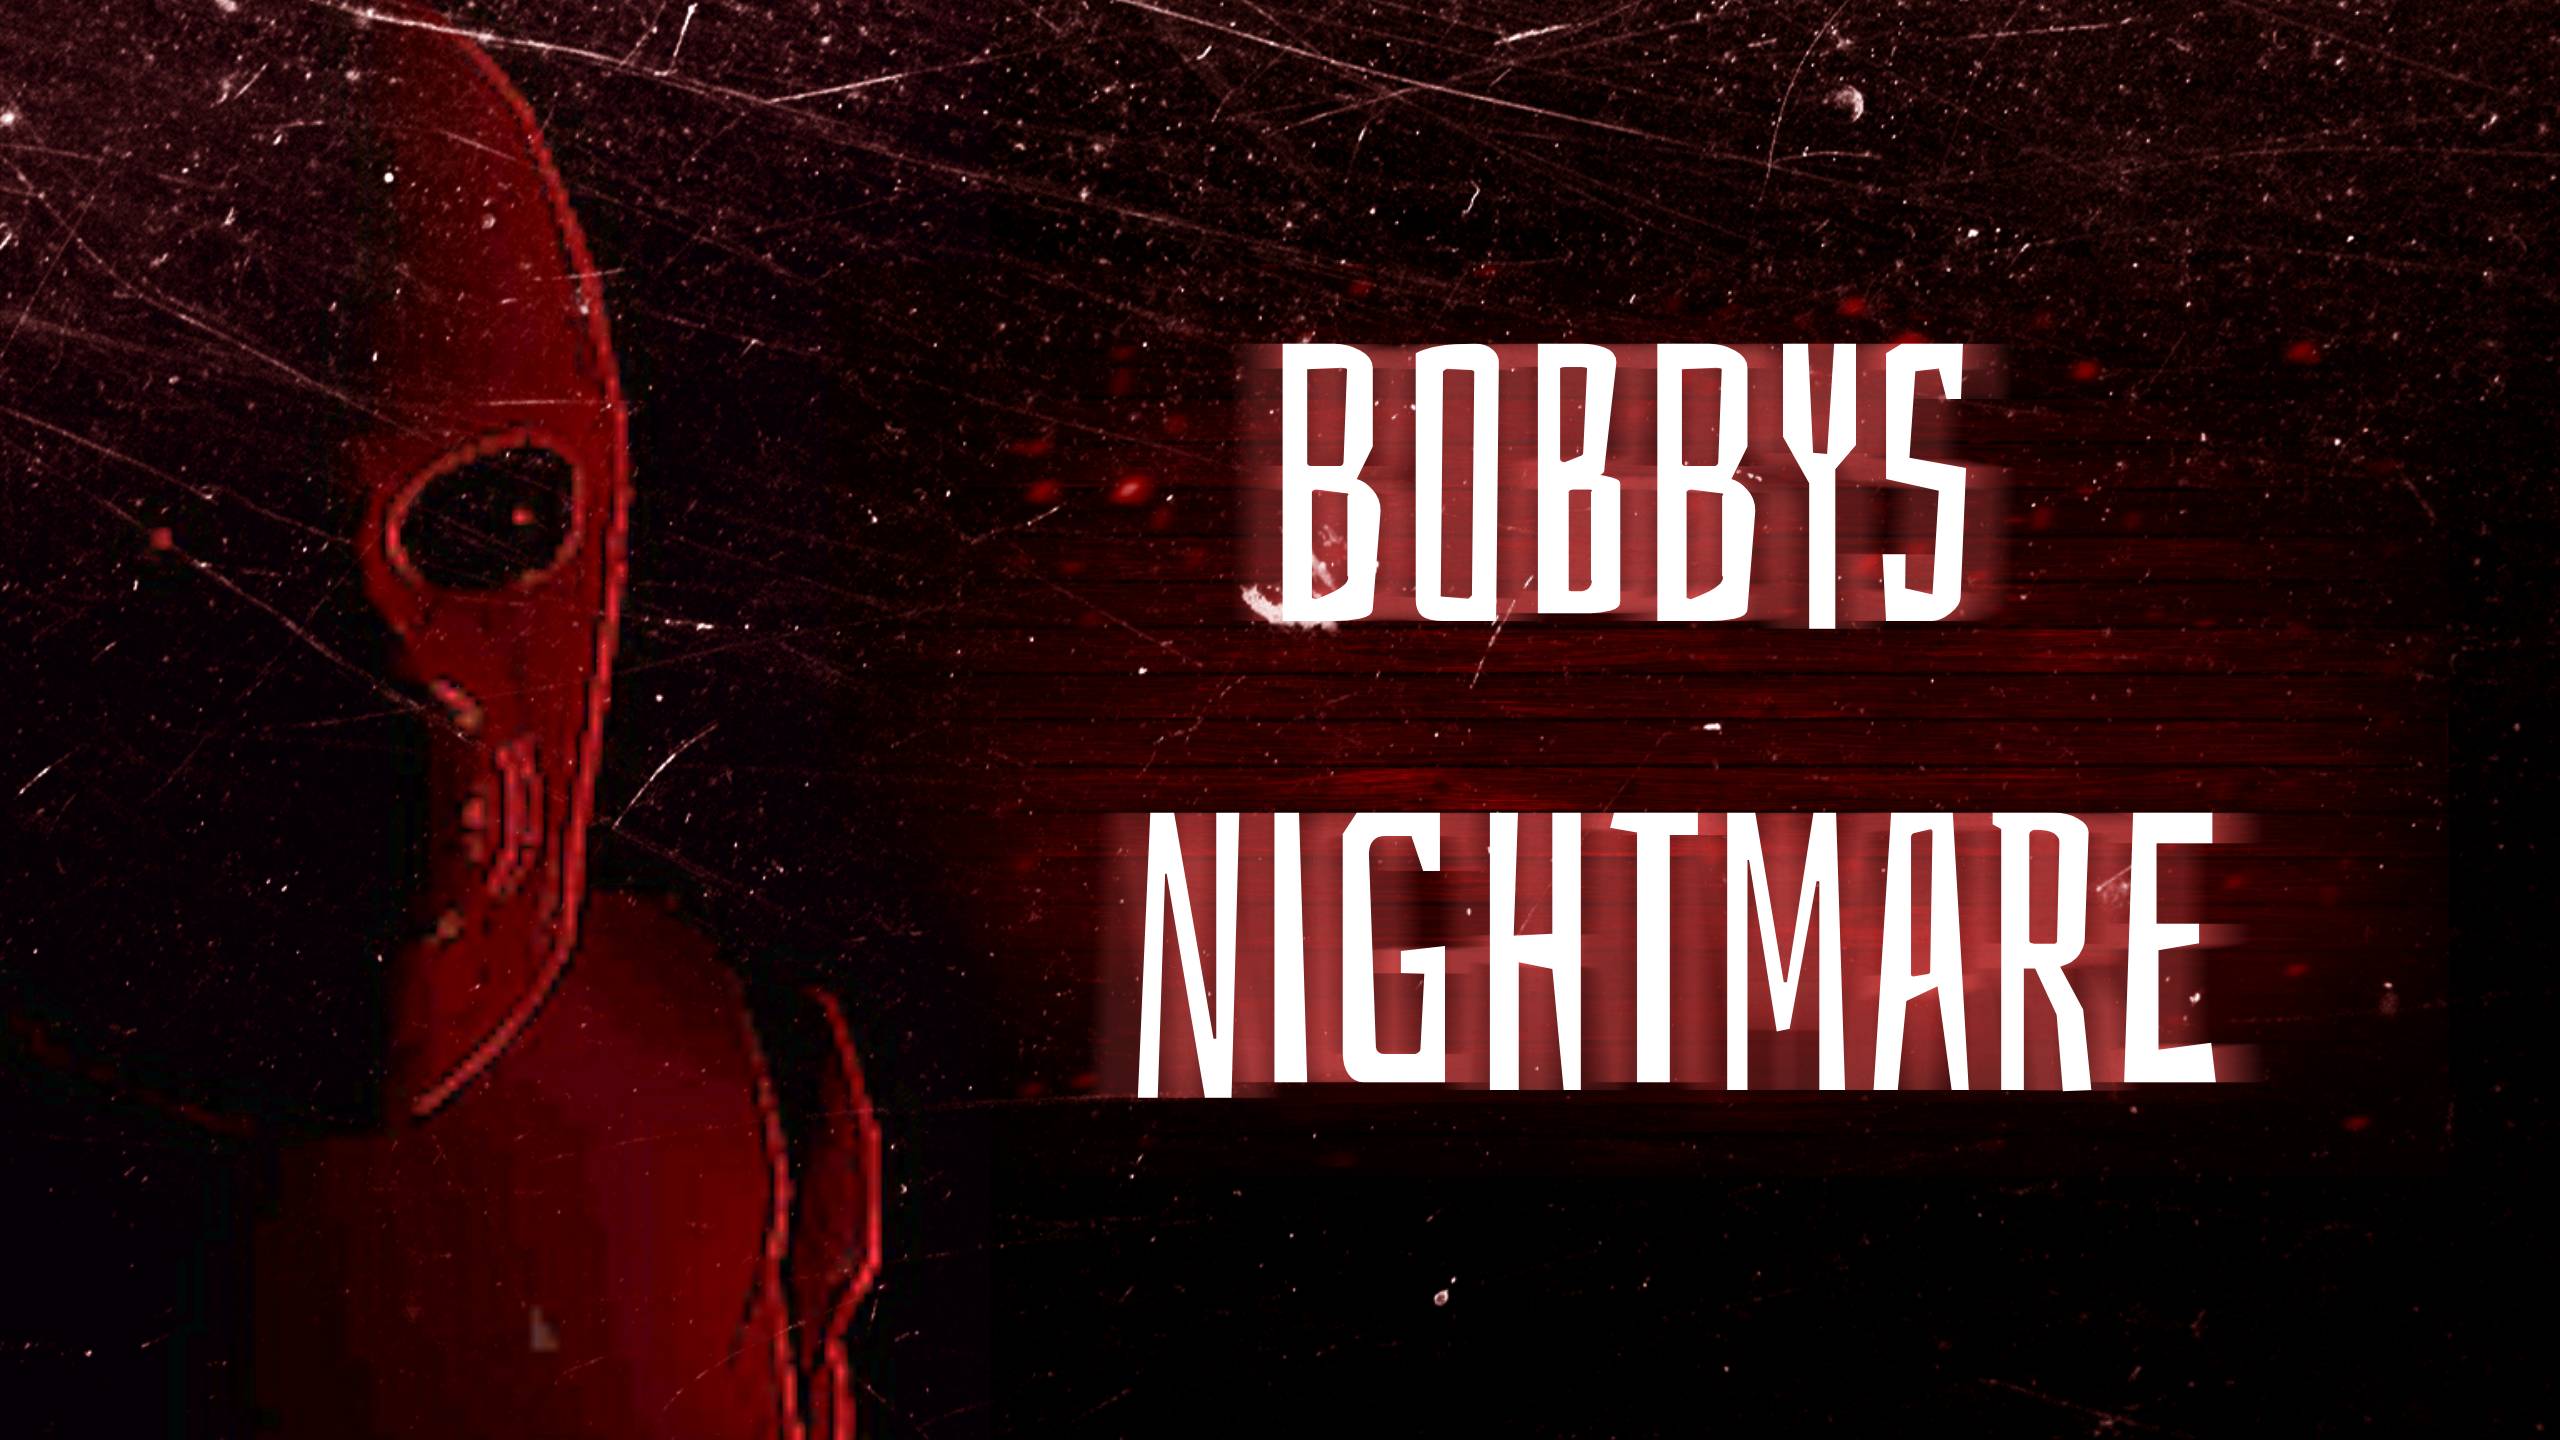 Bobbys: Nightmare